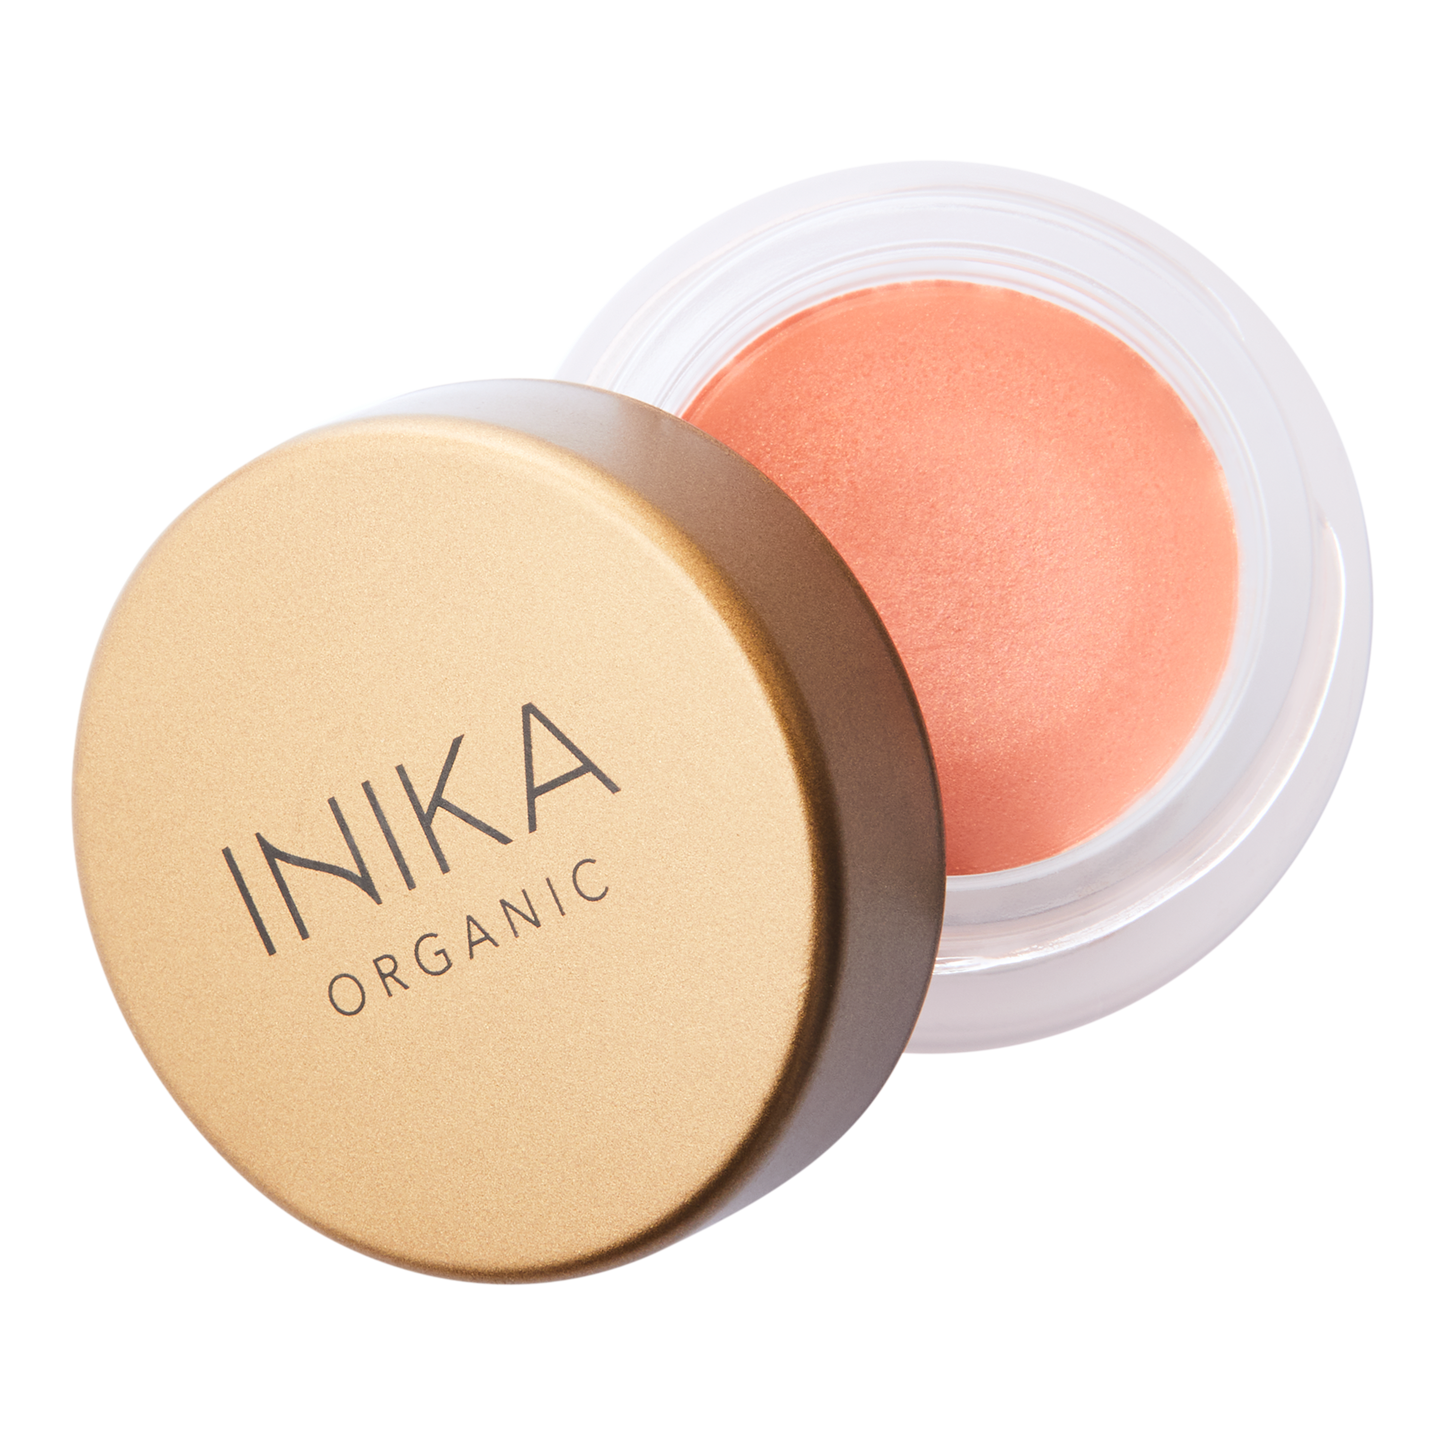 INIKA 'Limited Edition' Golden Plains, Dewy Skin Set